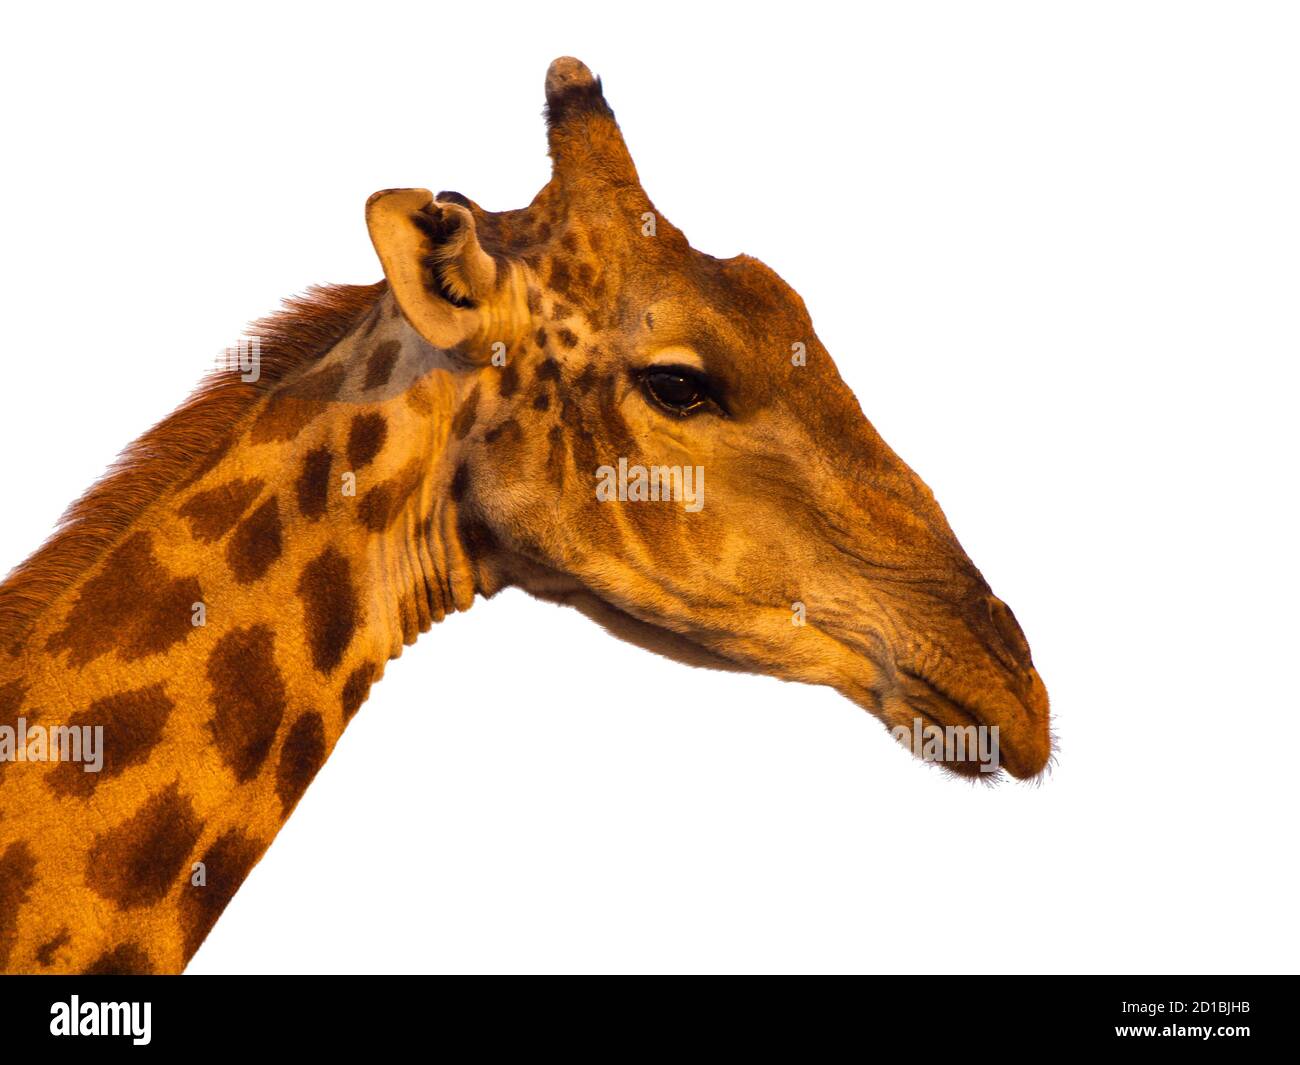 Giraffe profile portrait isolated on white background Stock Photo